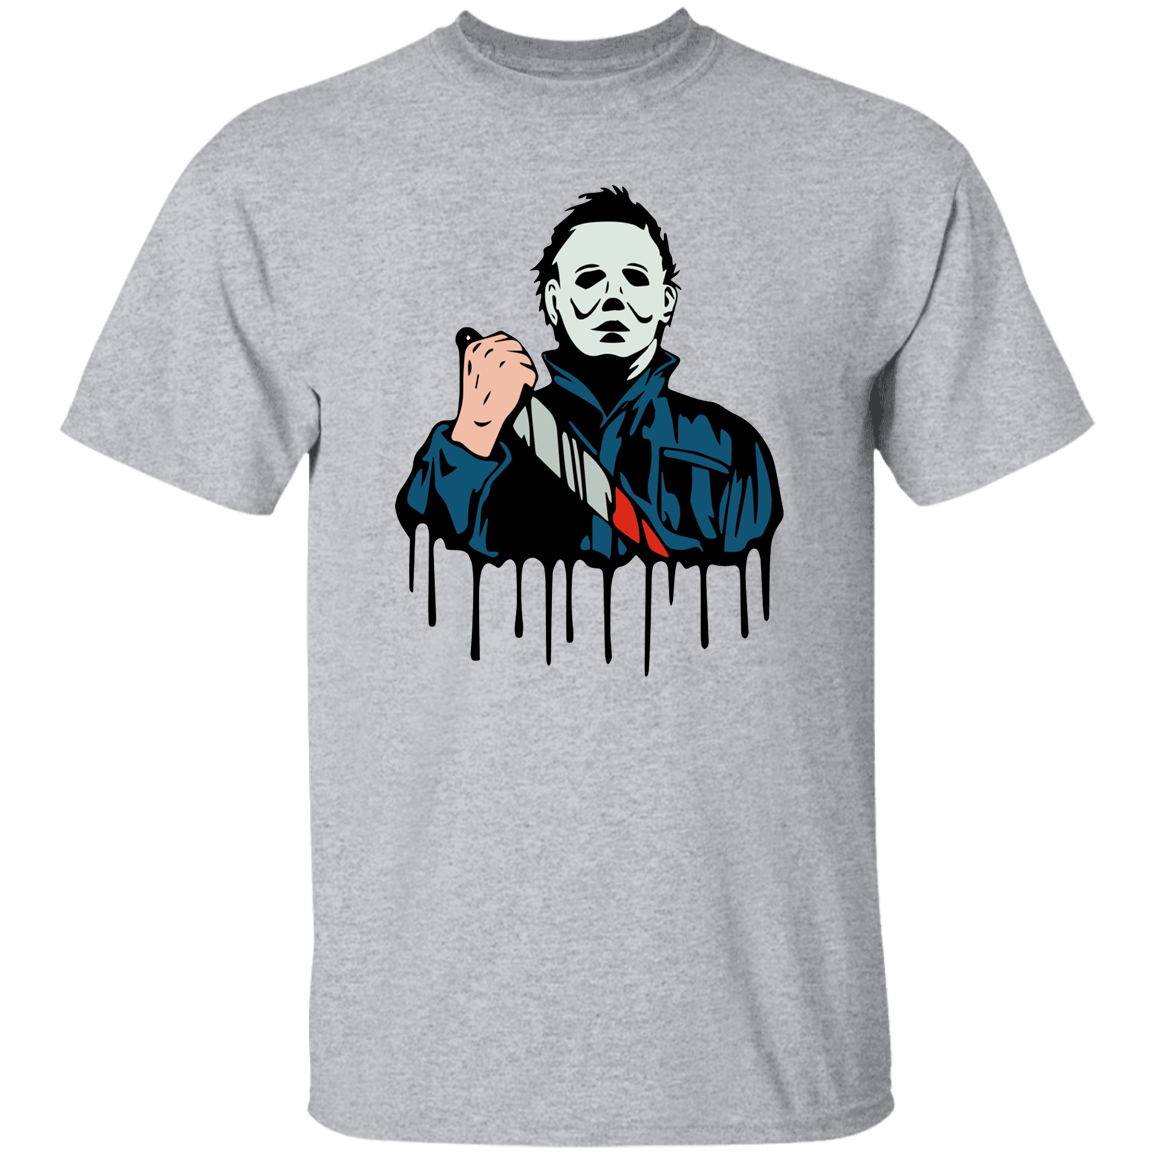 Myers 5.3 oz. T-Shirt